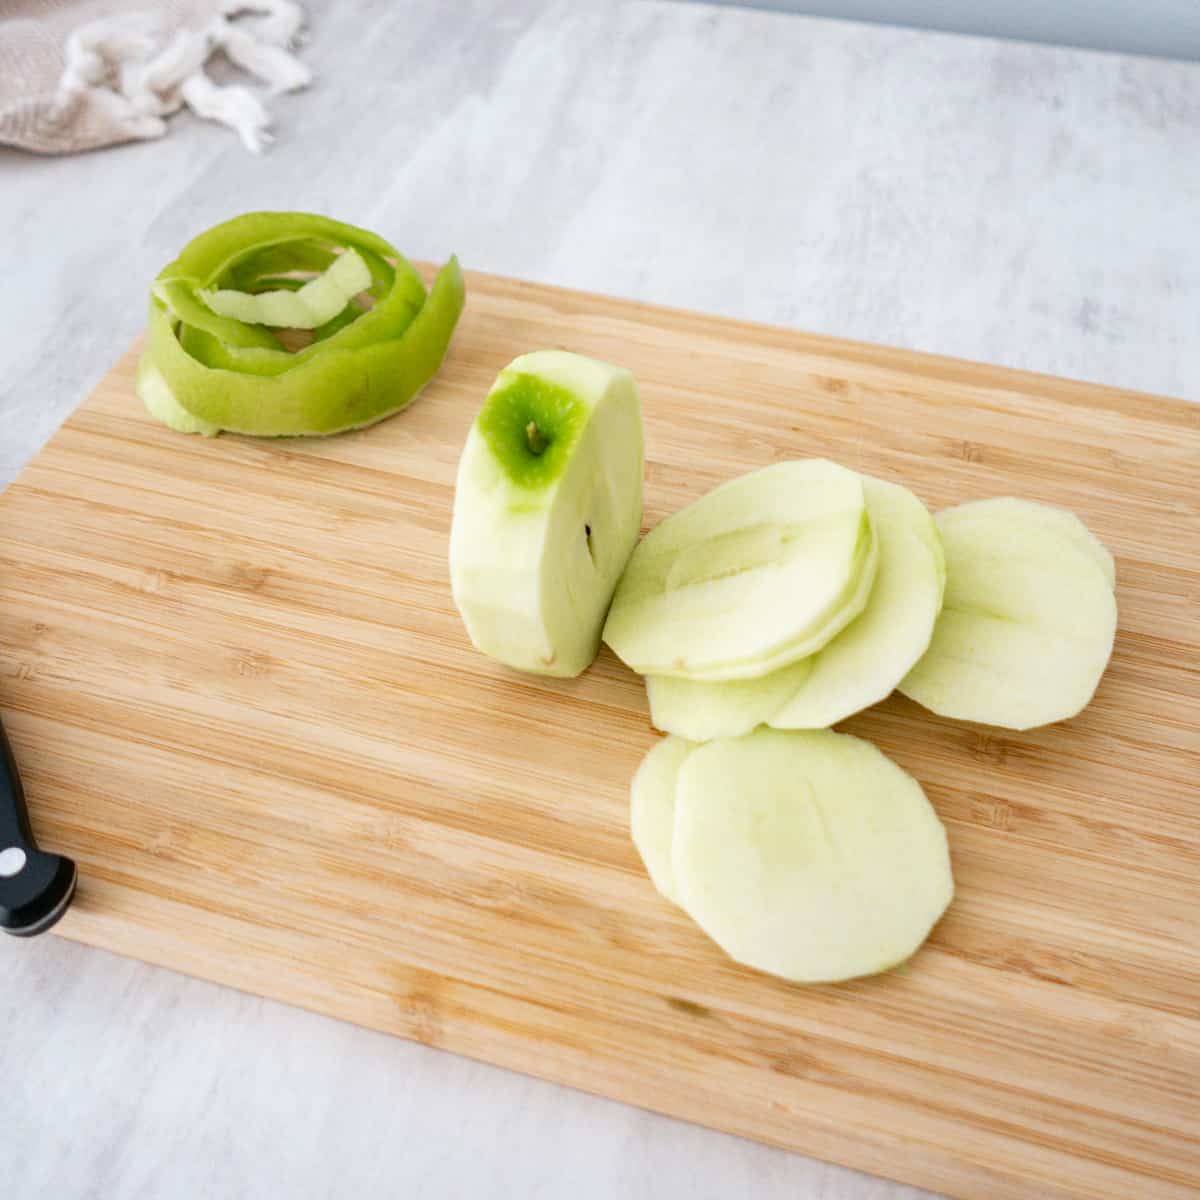 green apple peel and sliced